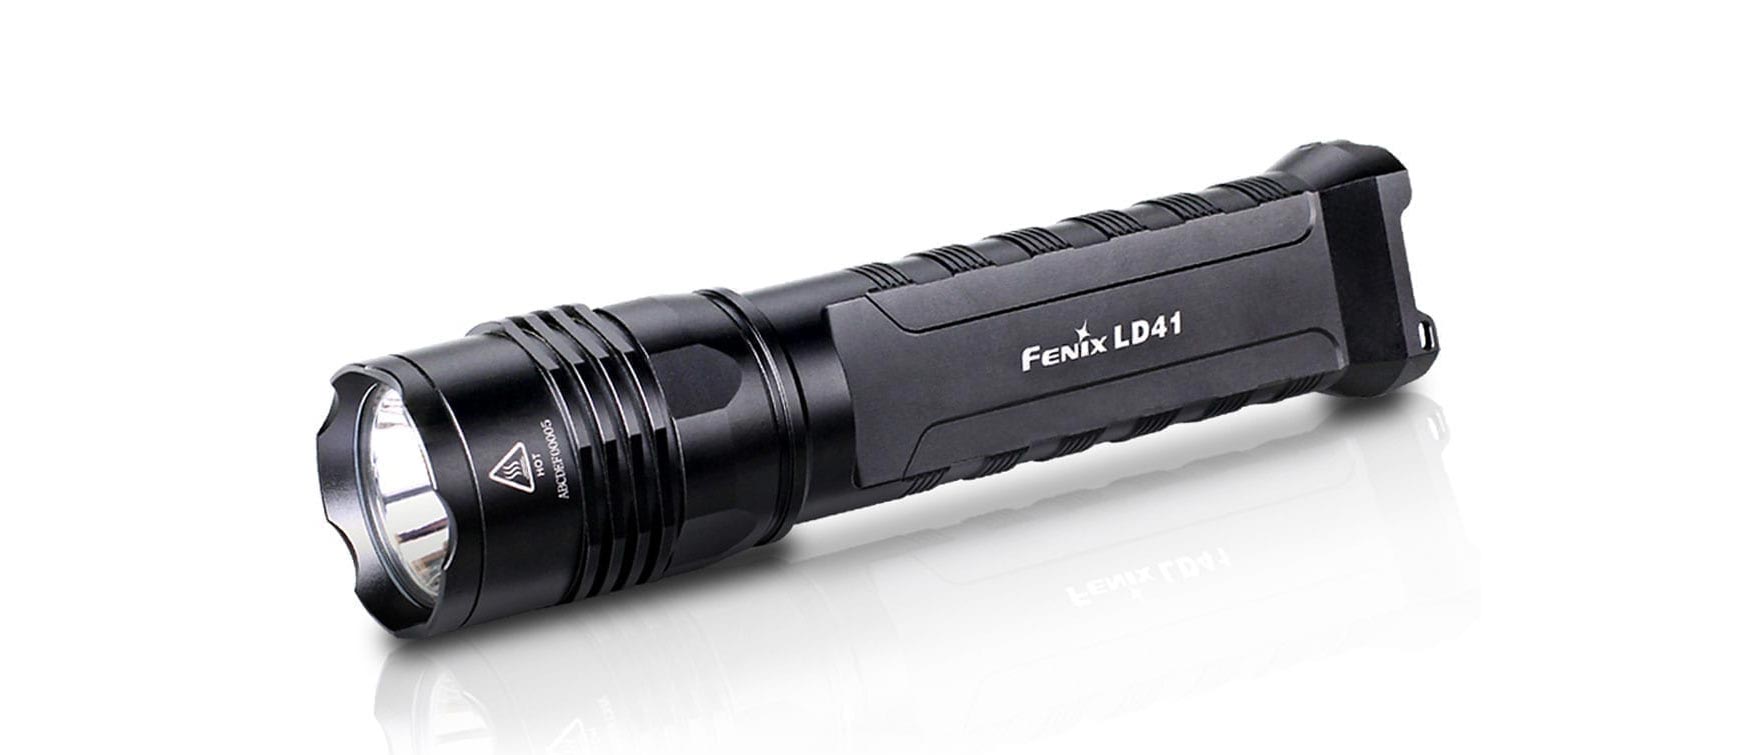 13. Fenix LD41 Flashlight